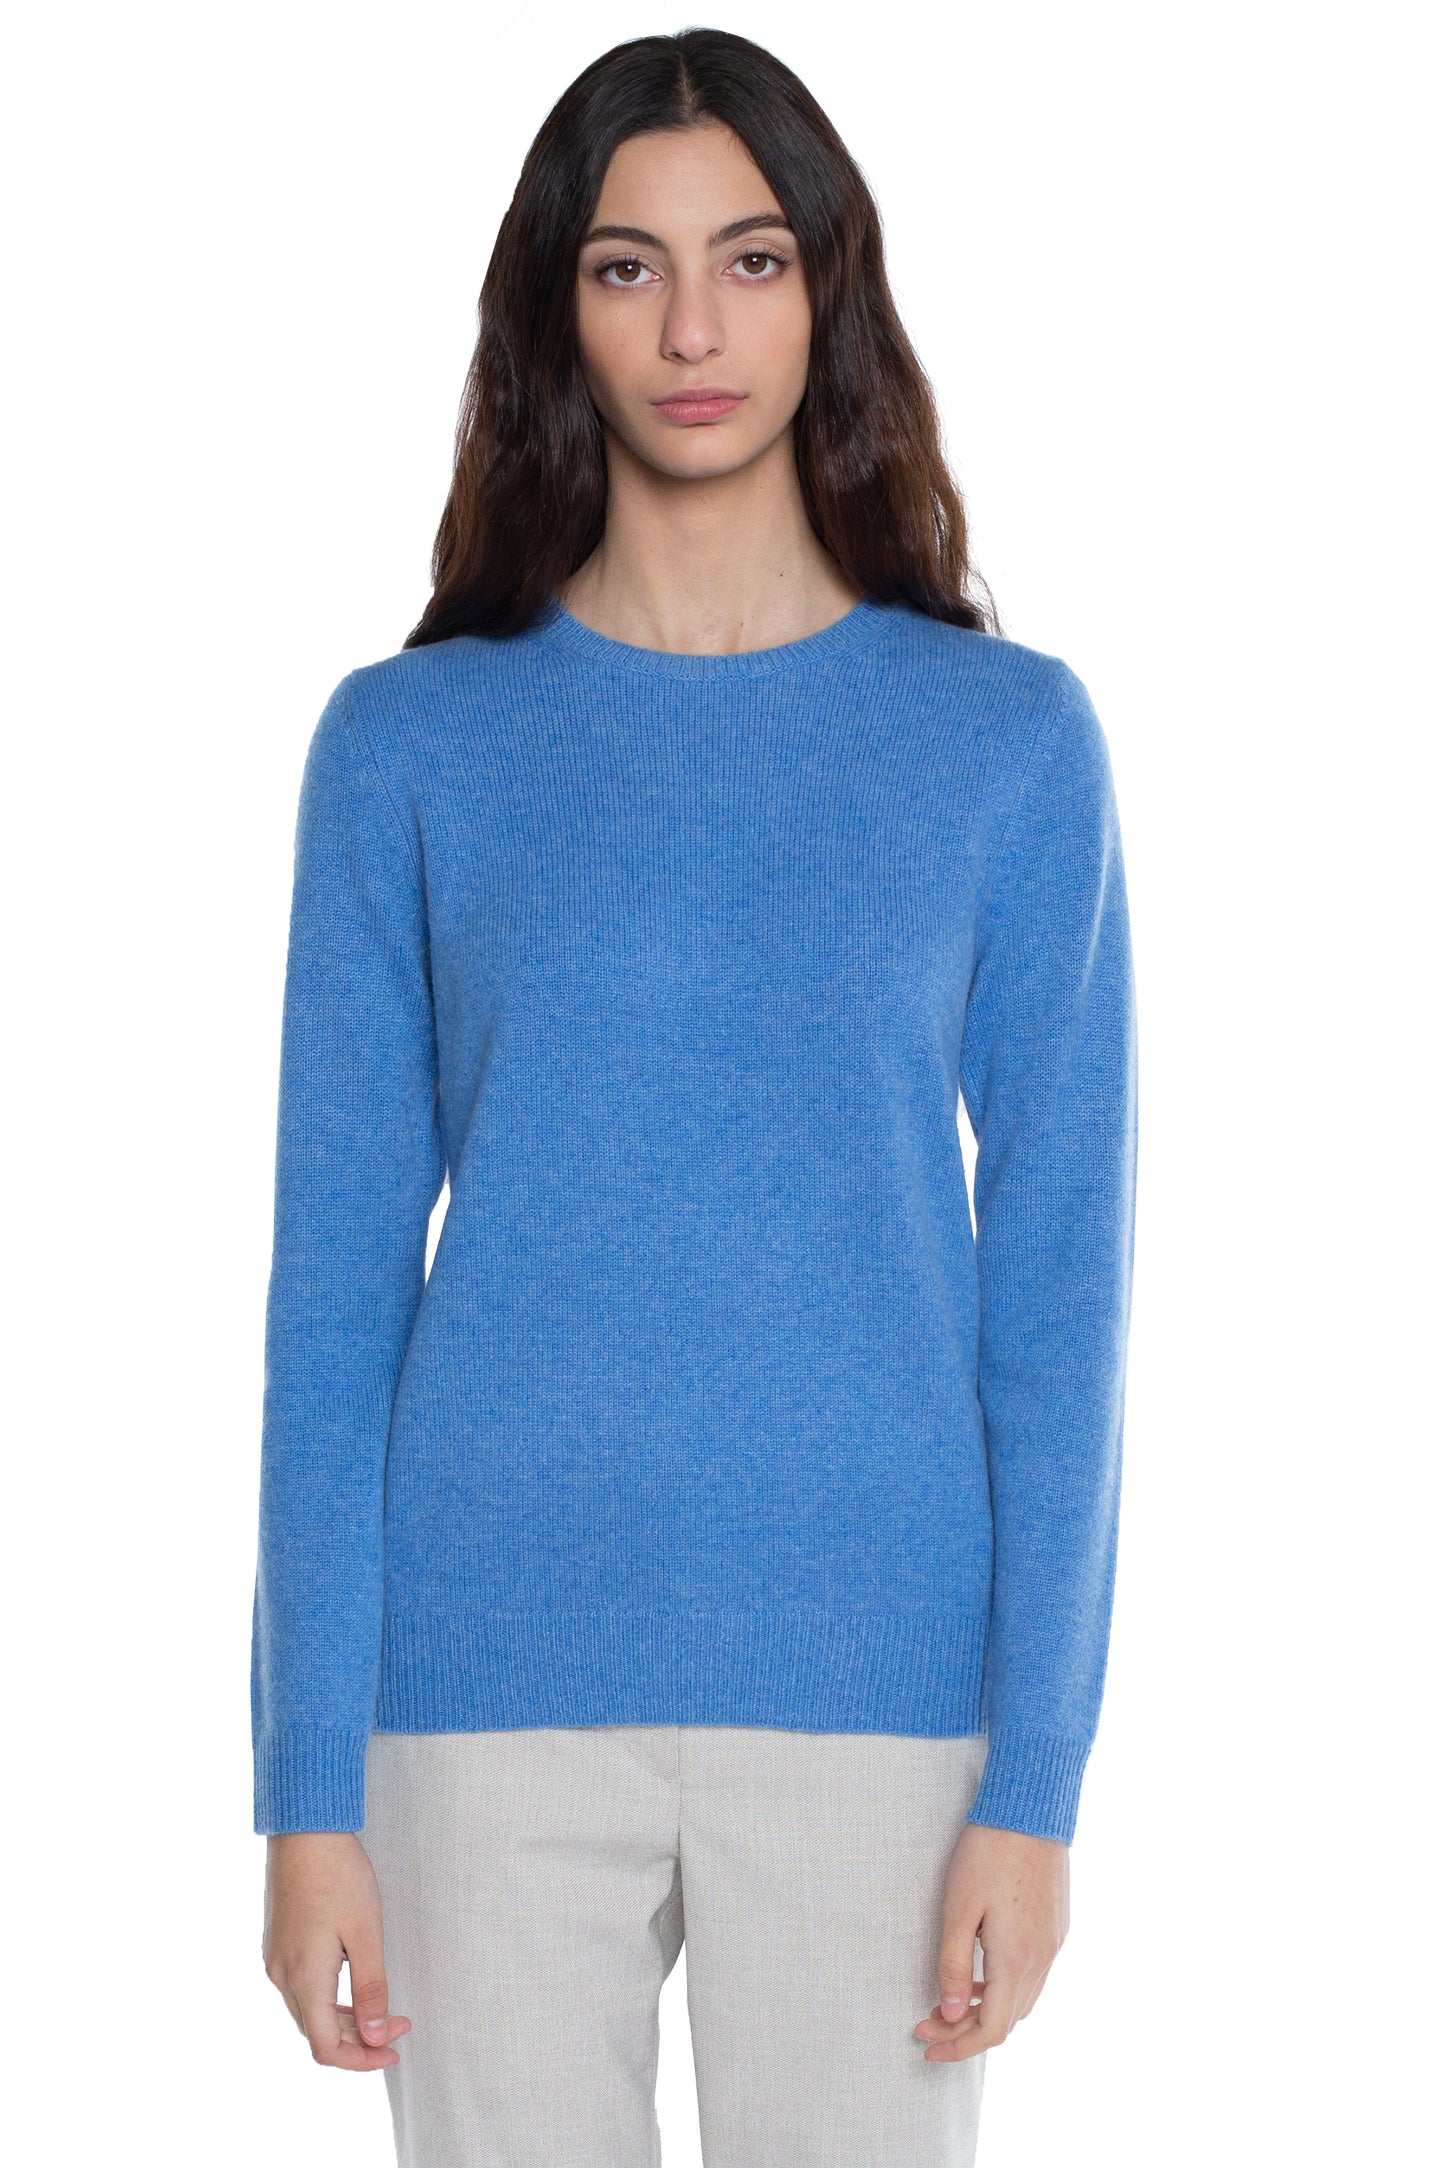 JENNIE LIU 100% Pure Cashmere 4-ply Extra Cozy Long Sleeve Crew Neck Sweater